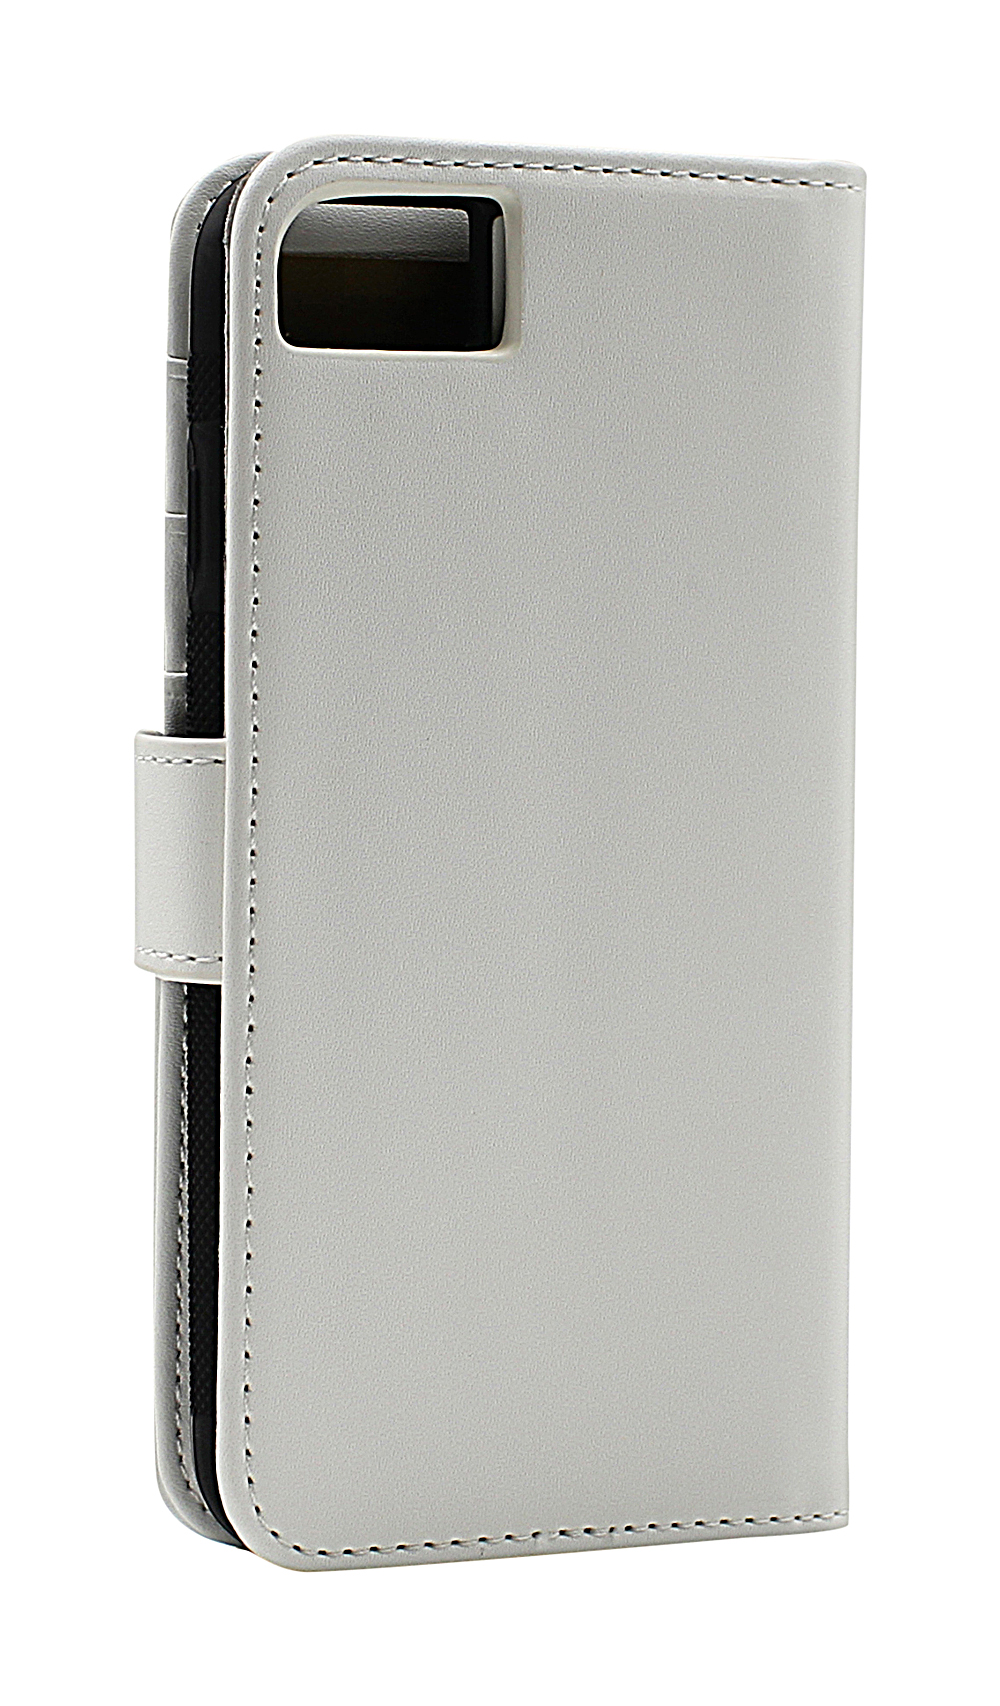 Skimblocker Magnet Wallet iPhone 7